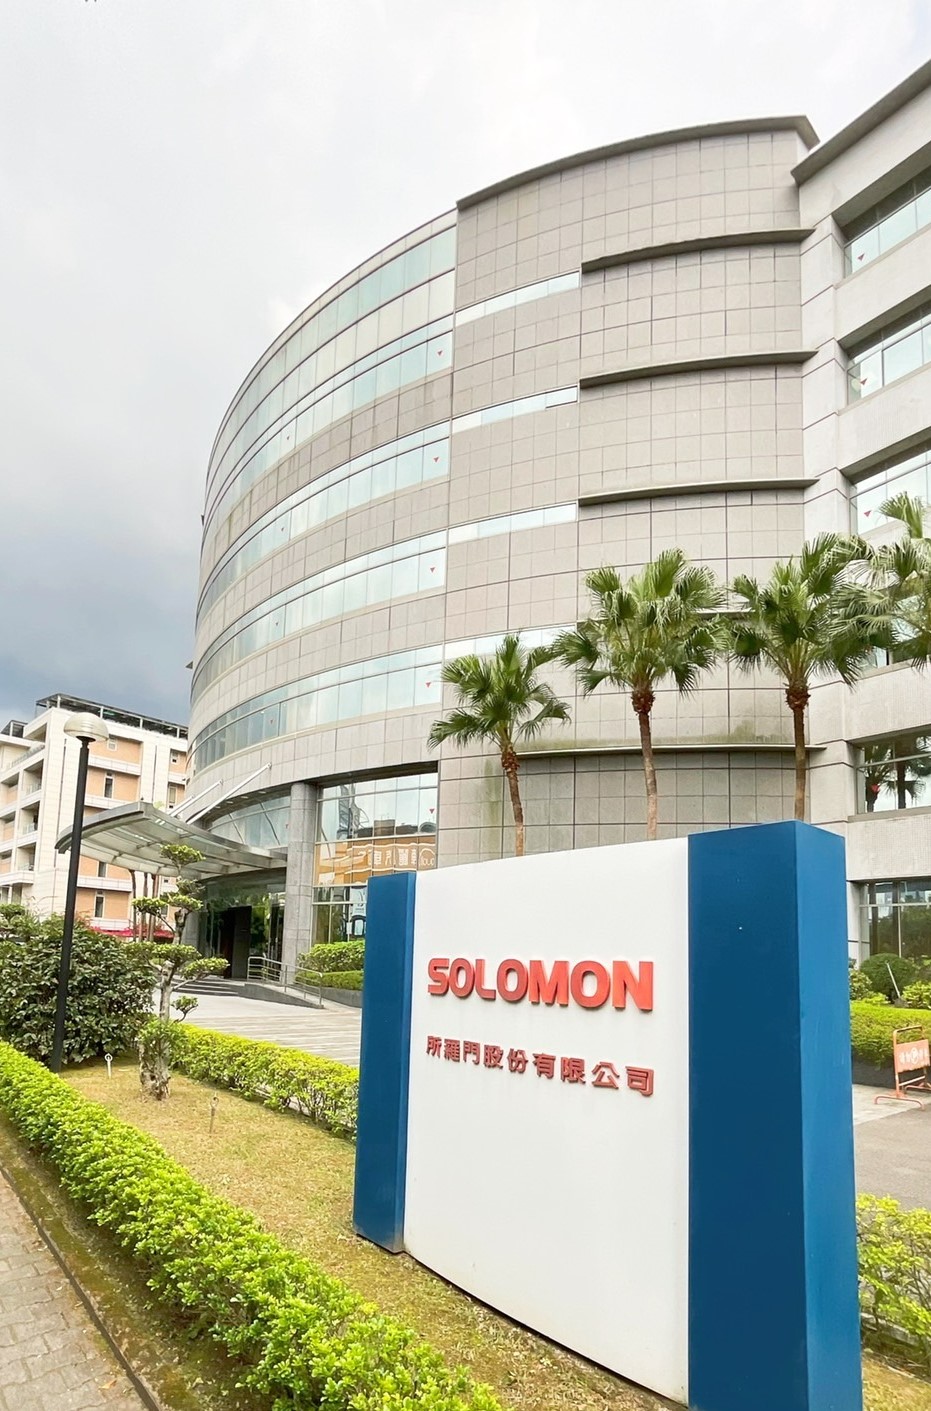 Solomon Technology Corporation company headquarters building in Taipei Taiwan